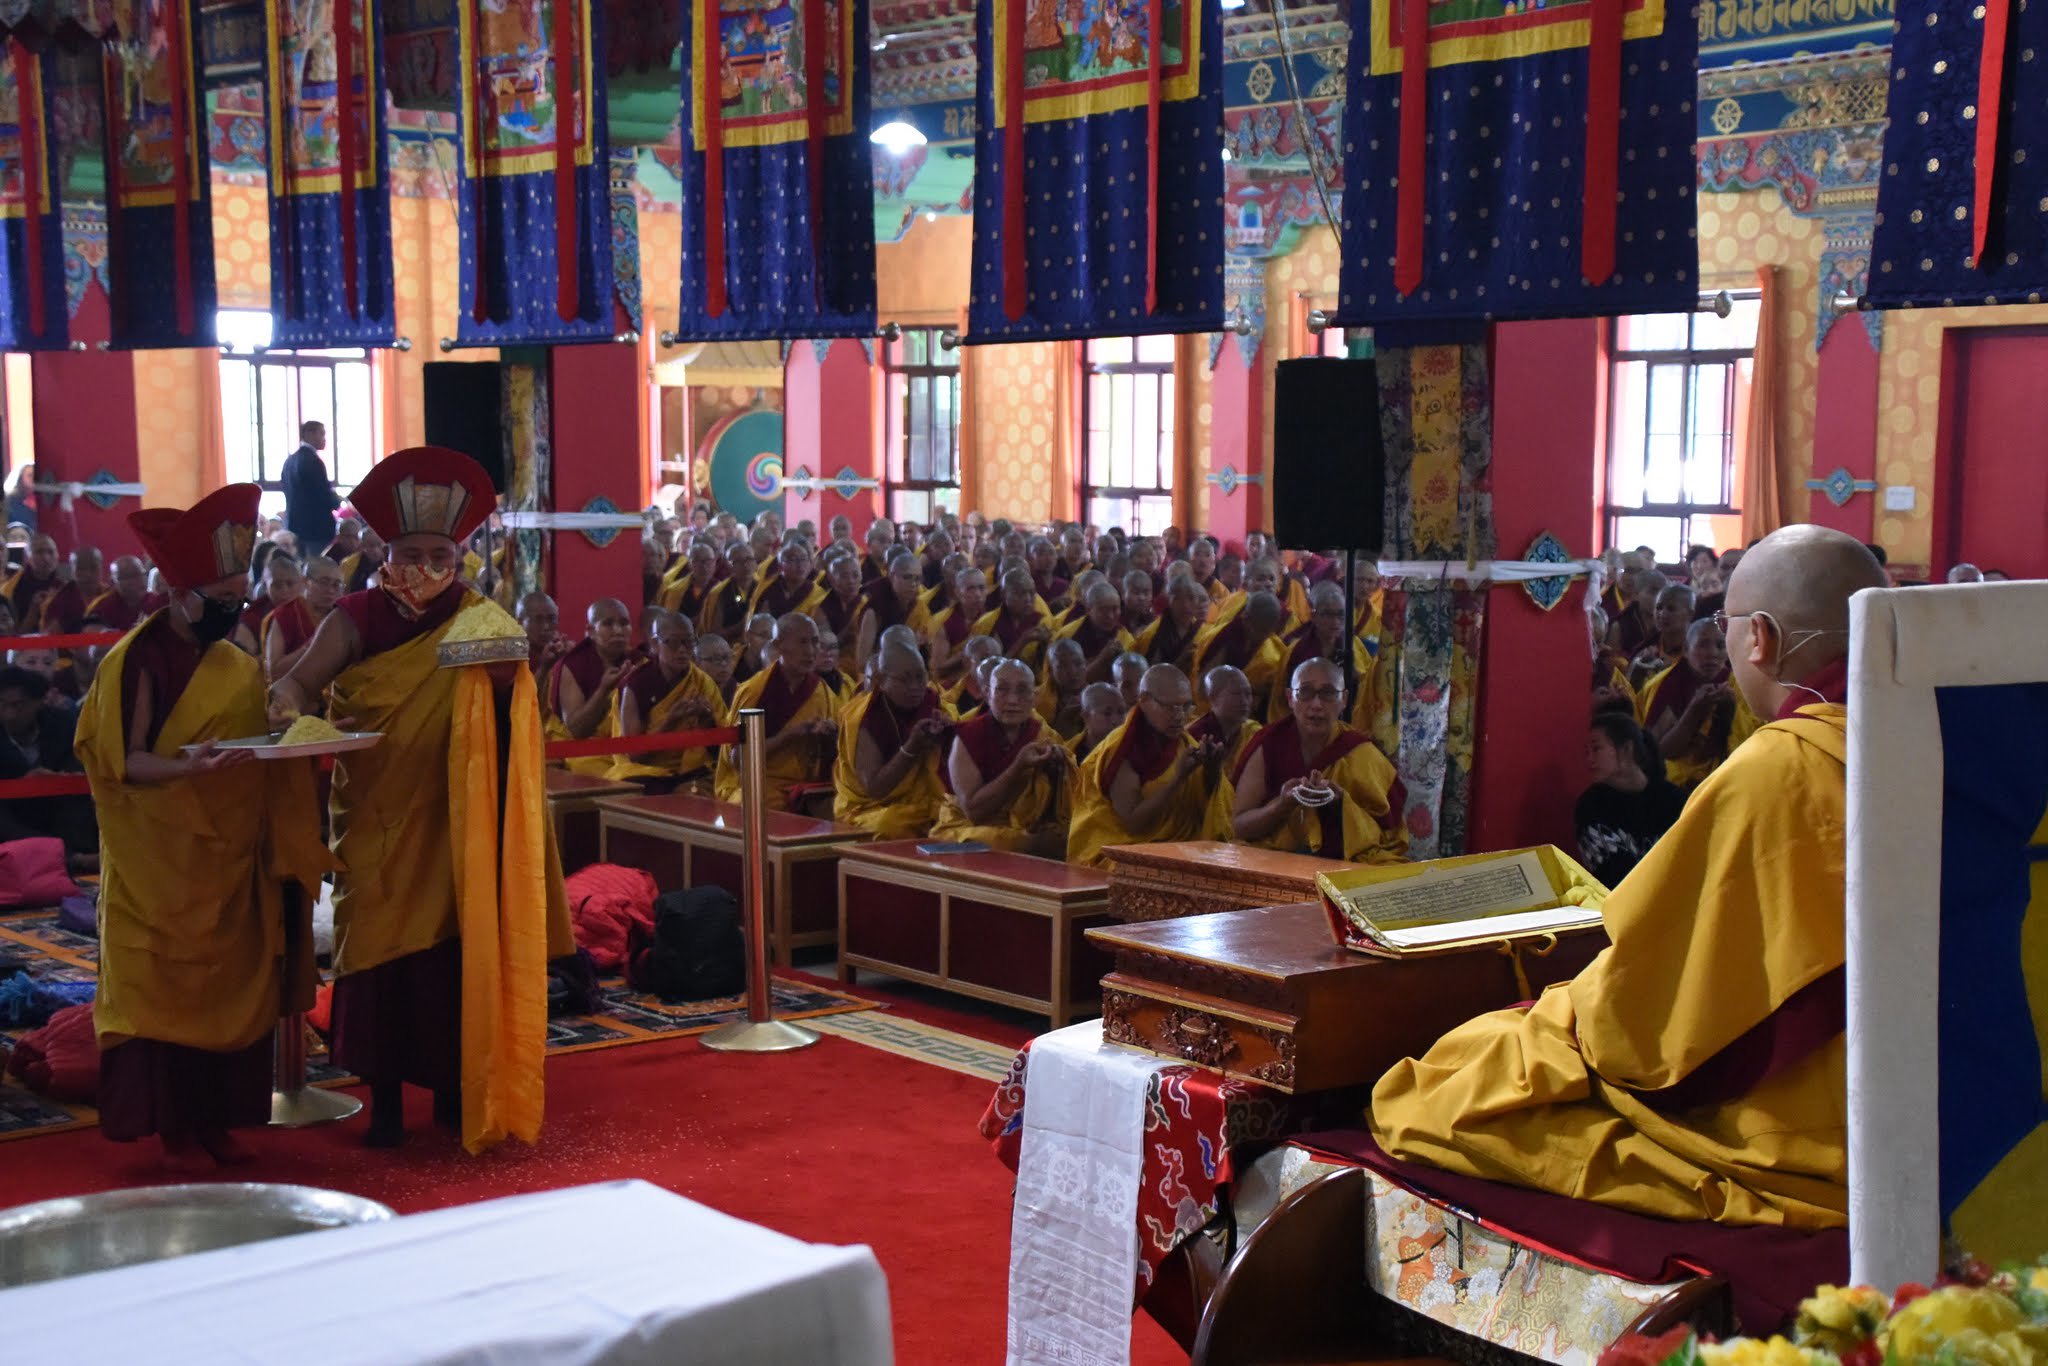 The Gyalwang Karmapa Opens the Third Arya Kshema Winter Dharma Gathering